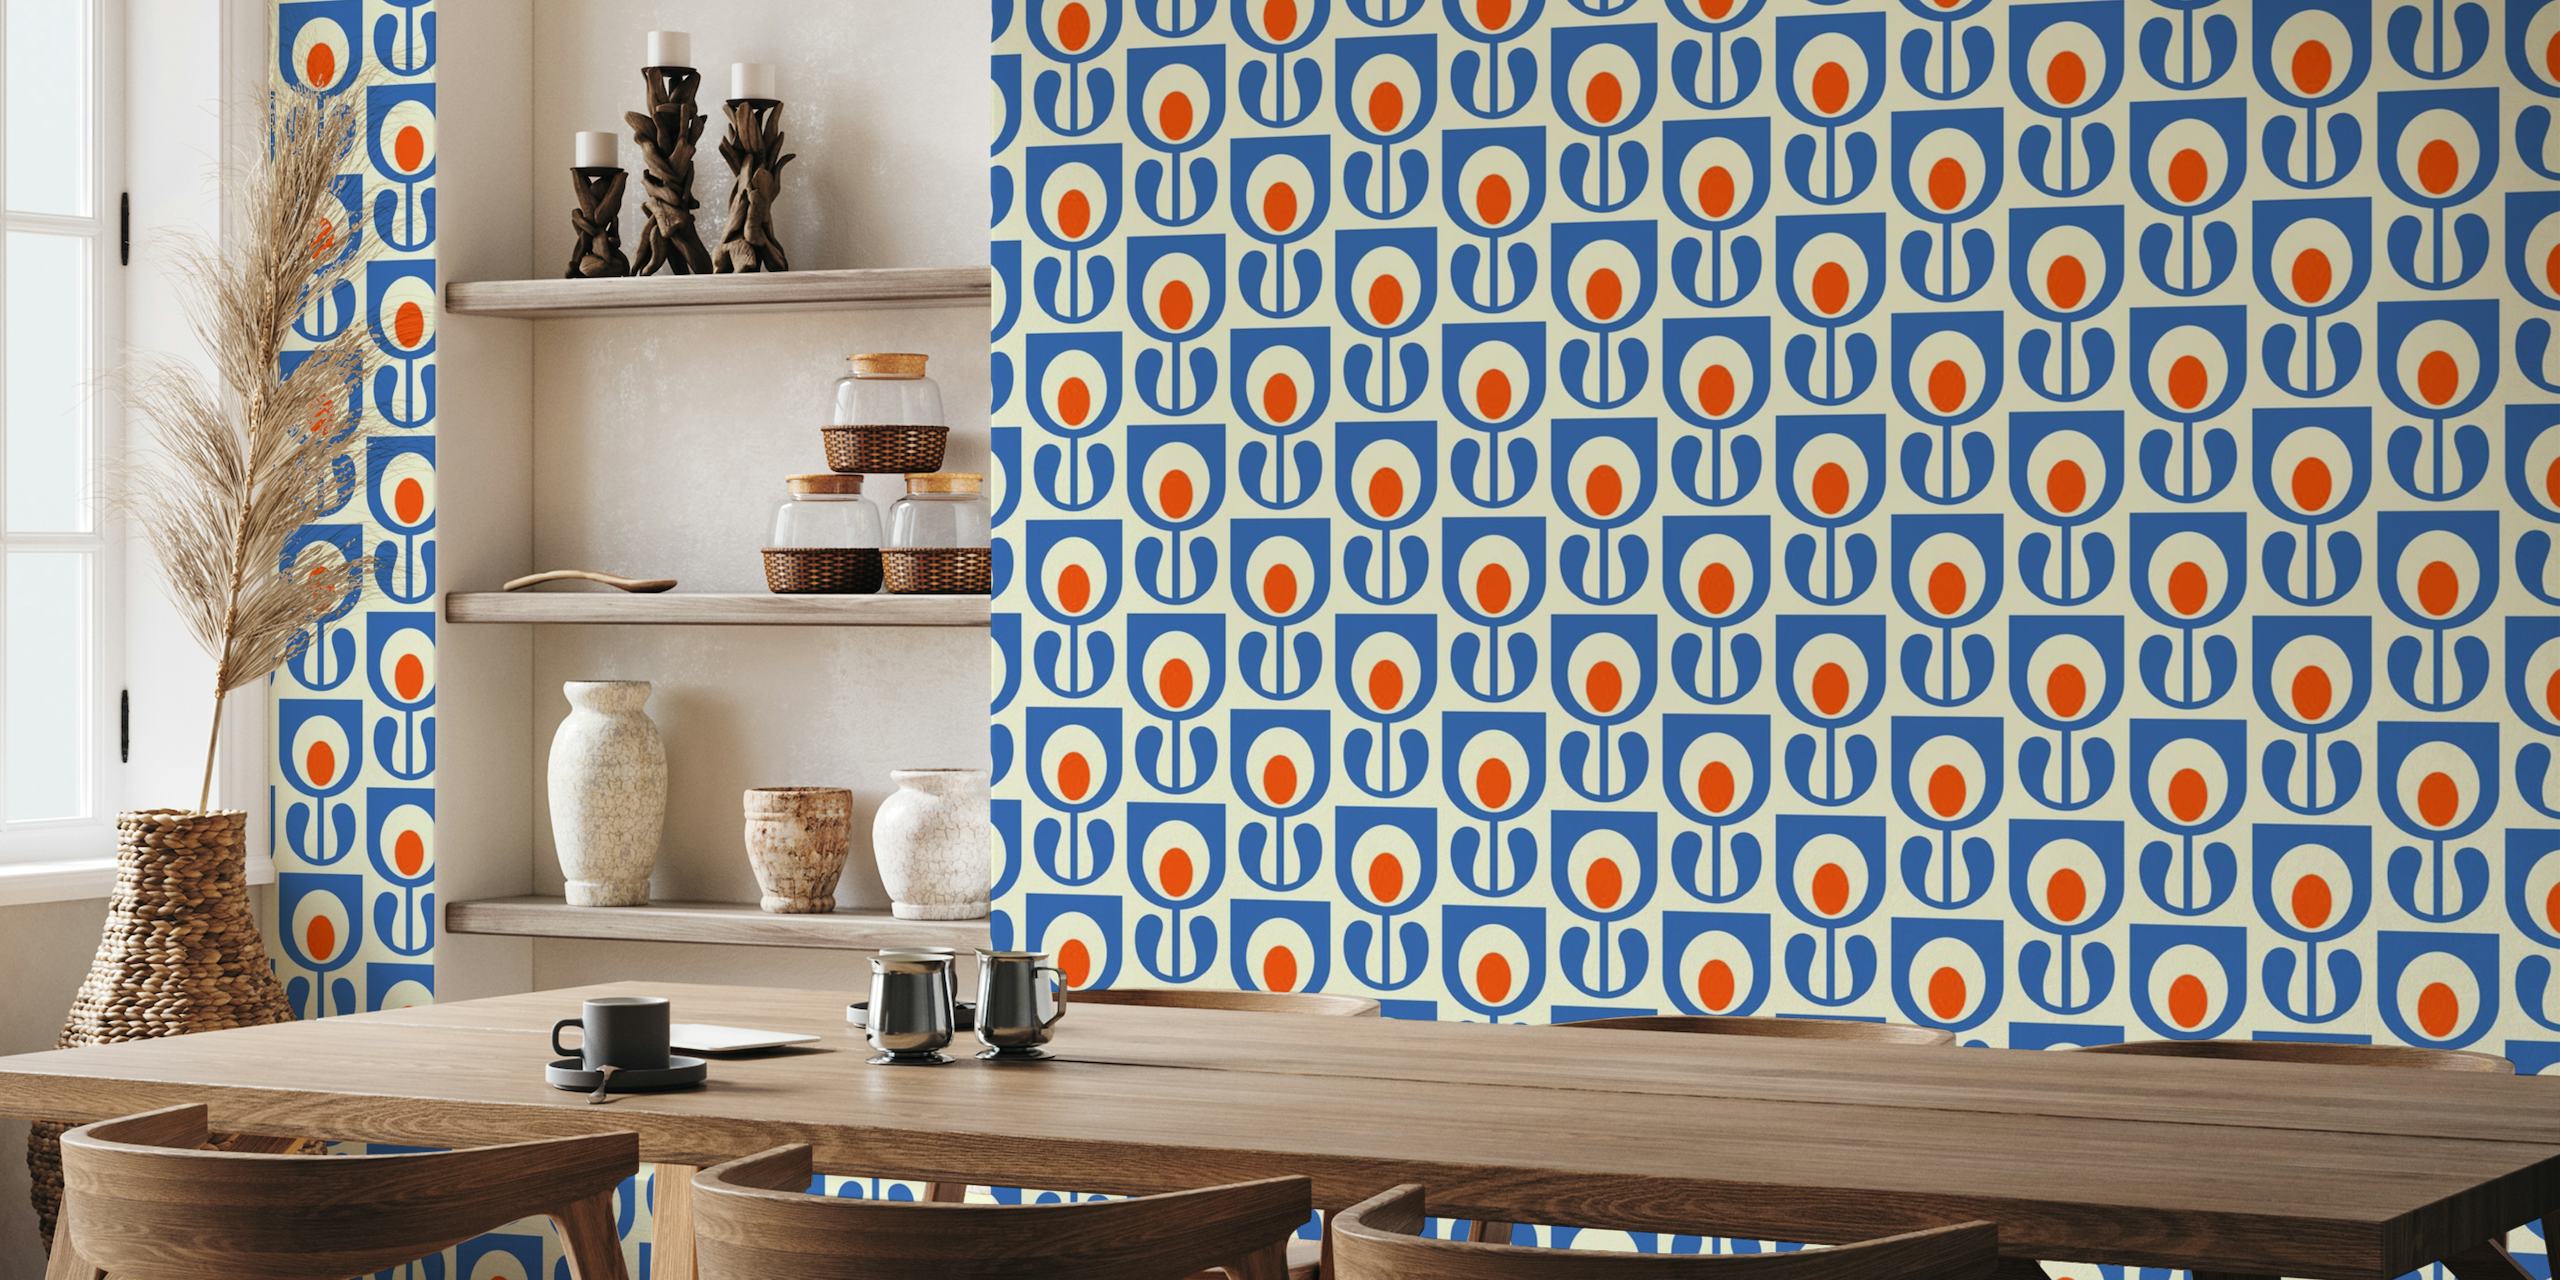 2523 A - retro tulips pattern, blue tapetit